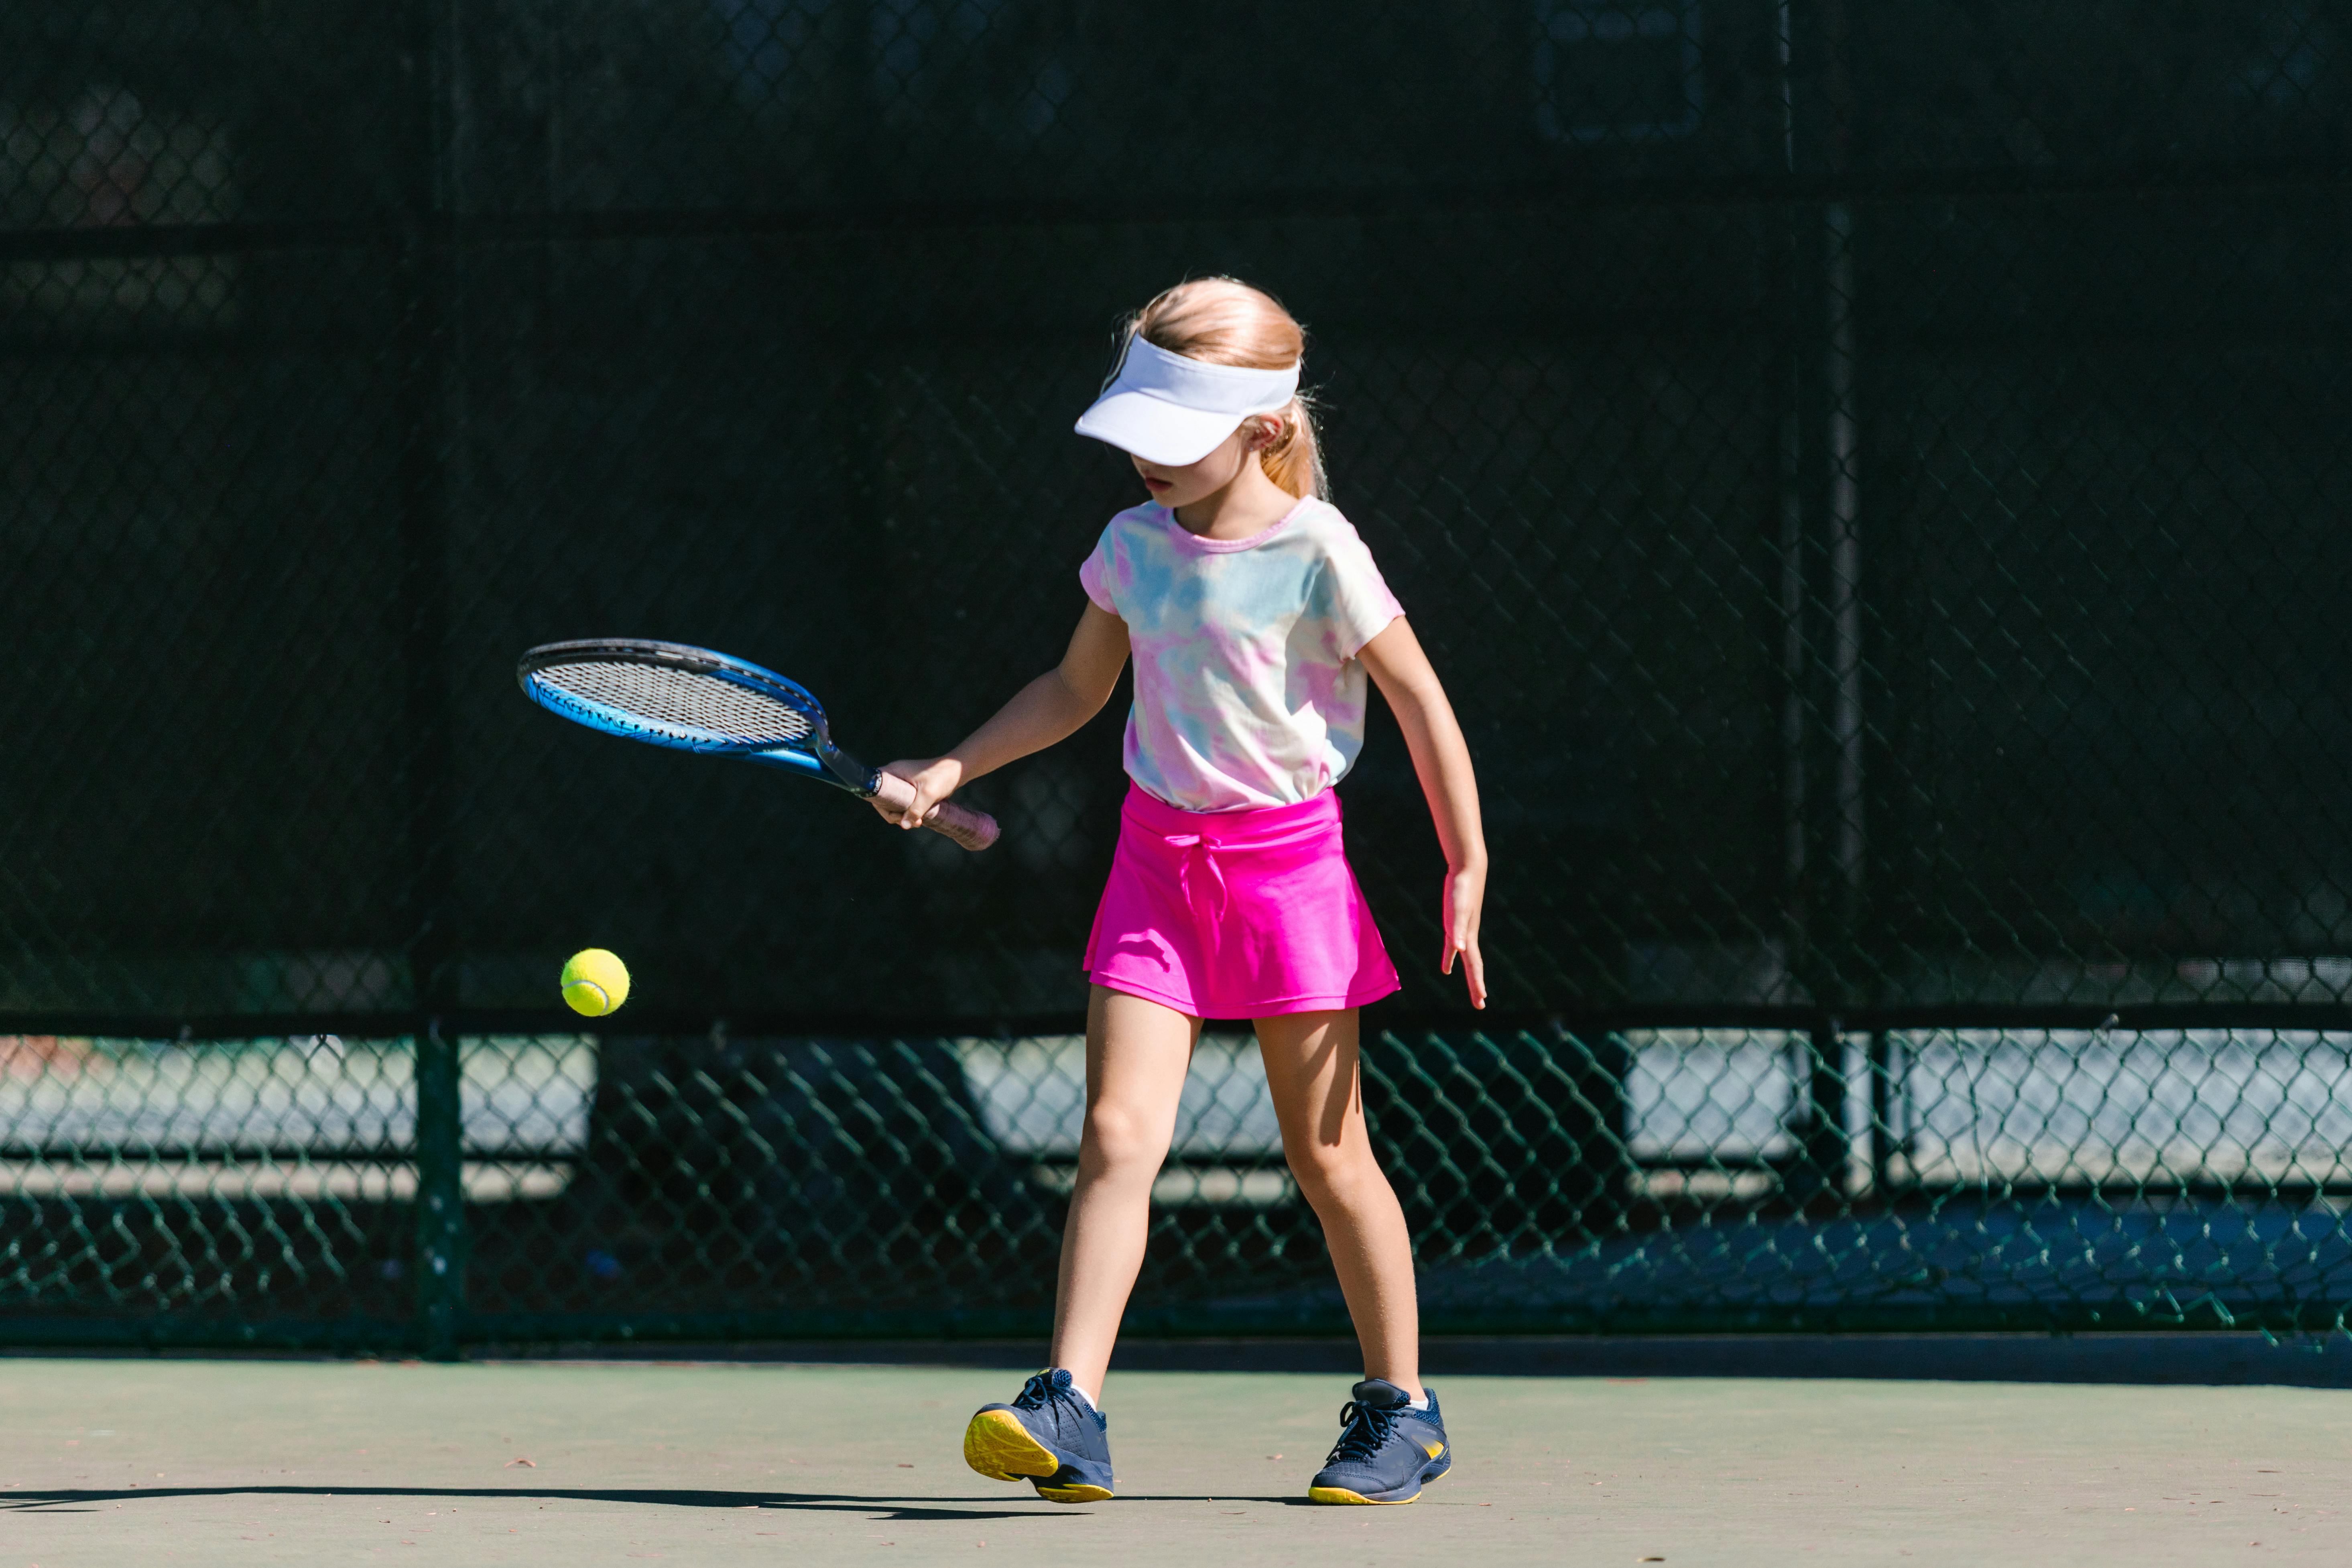 Girl Playing Tennis · Free Stock Photo